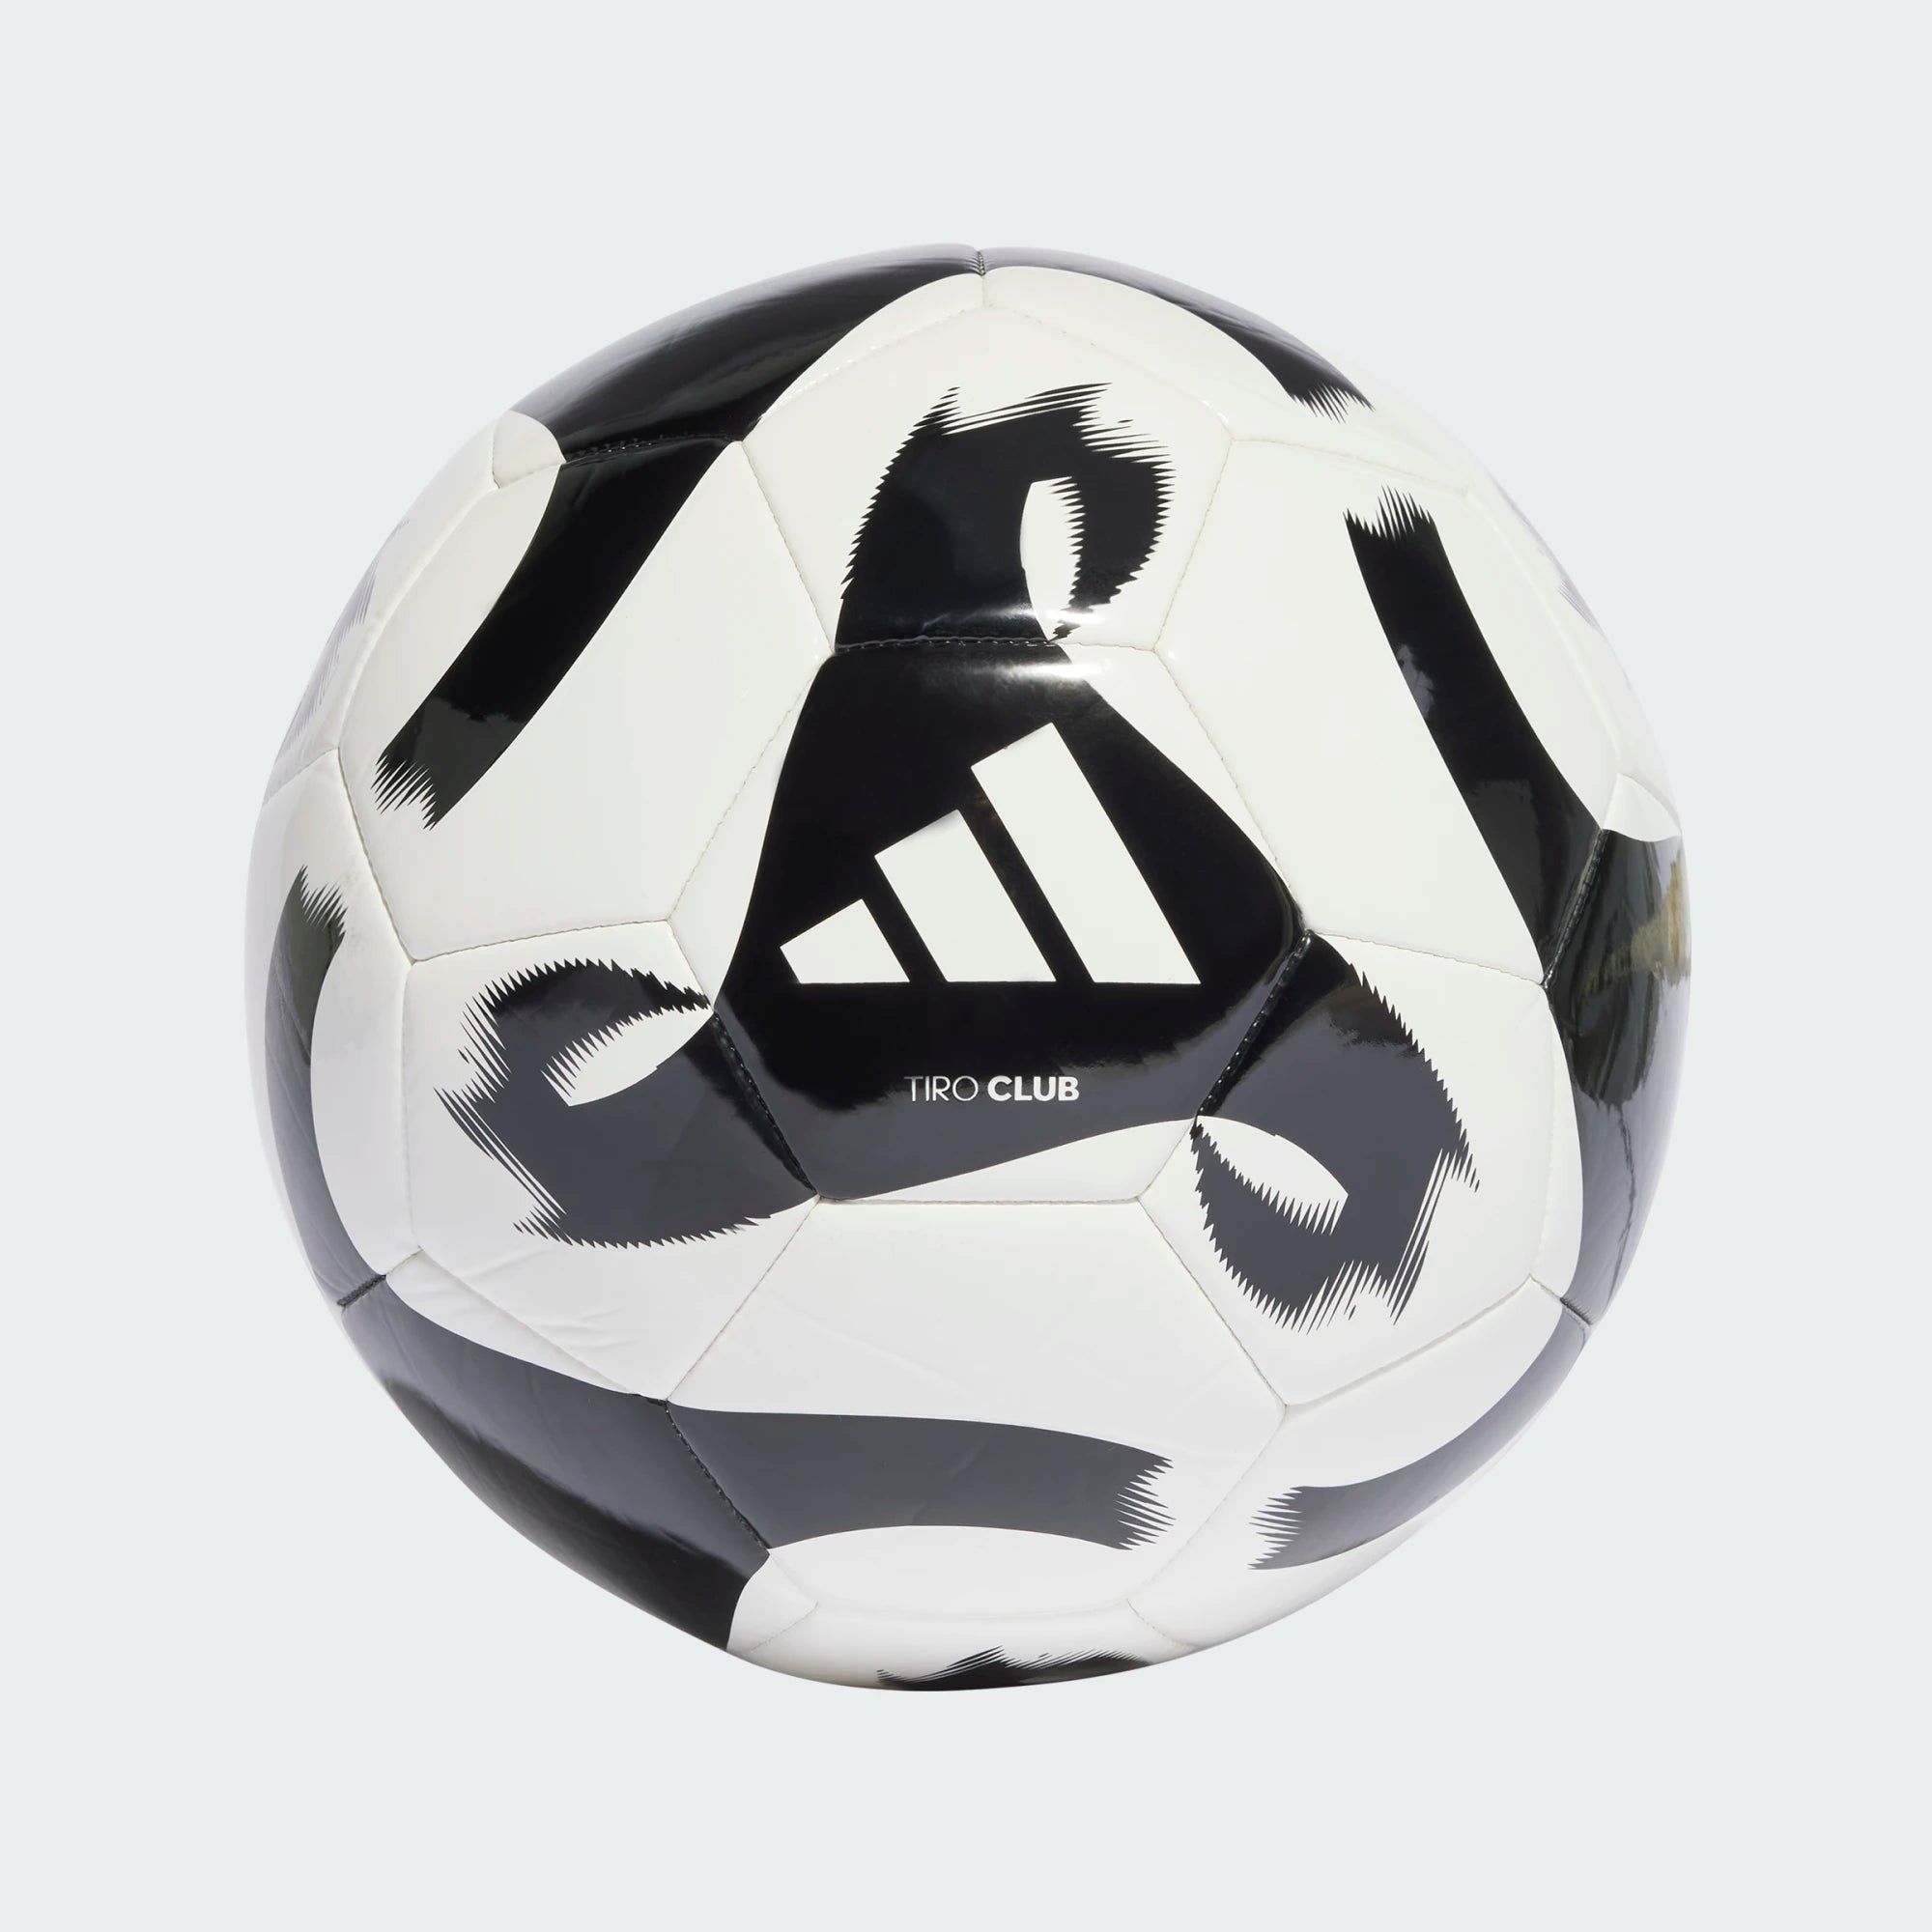 Adidas Tiro Club Soccer Ball-Adidas-Sports Replay - Sports Excellence